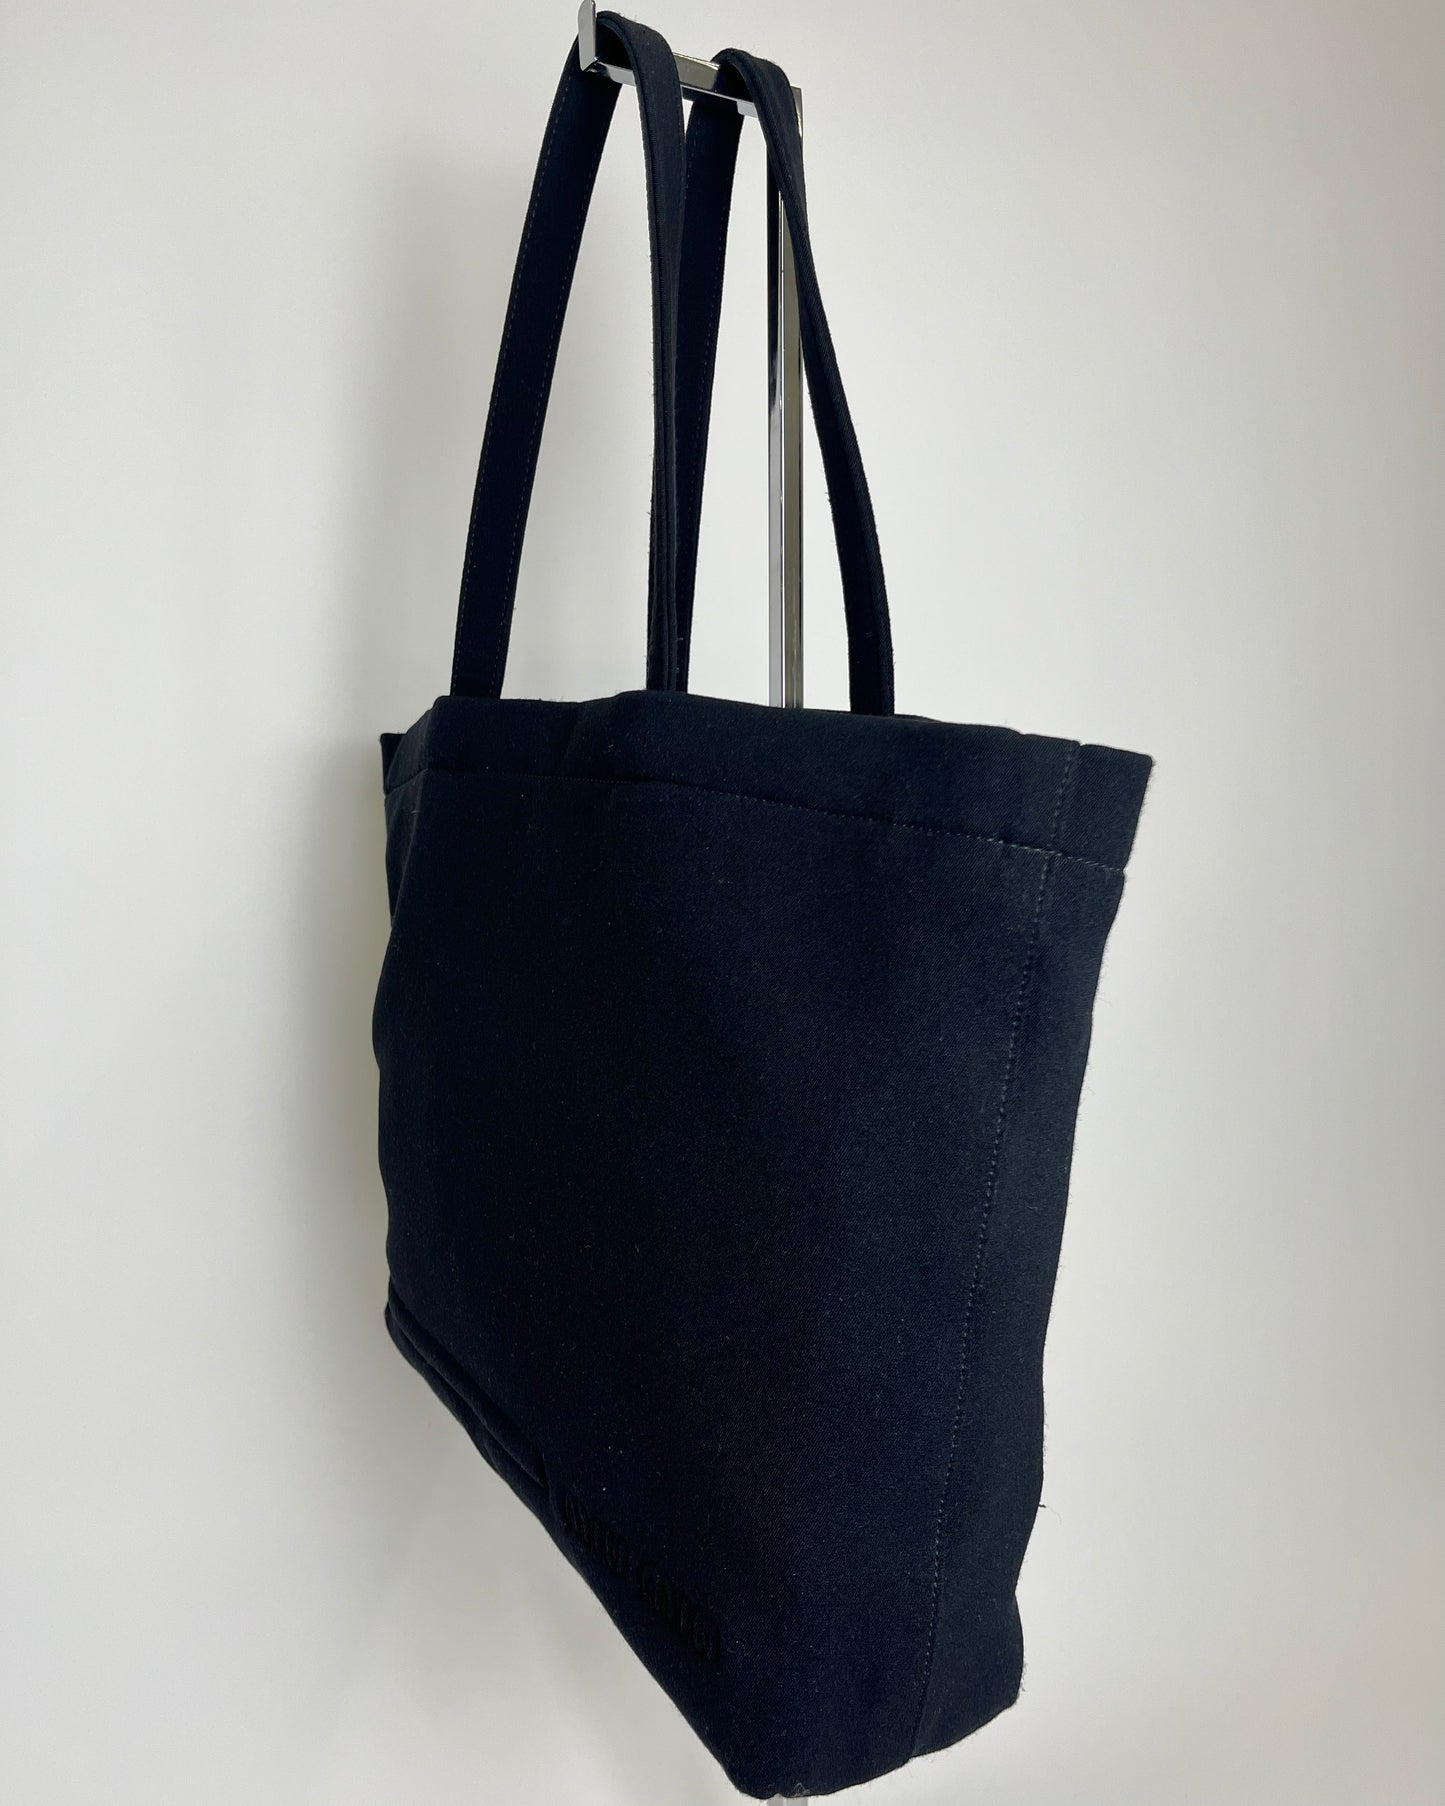 Miu Miu 1990’s Archive Nylon Tote Bag Black